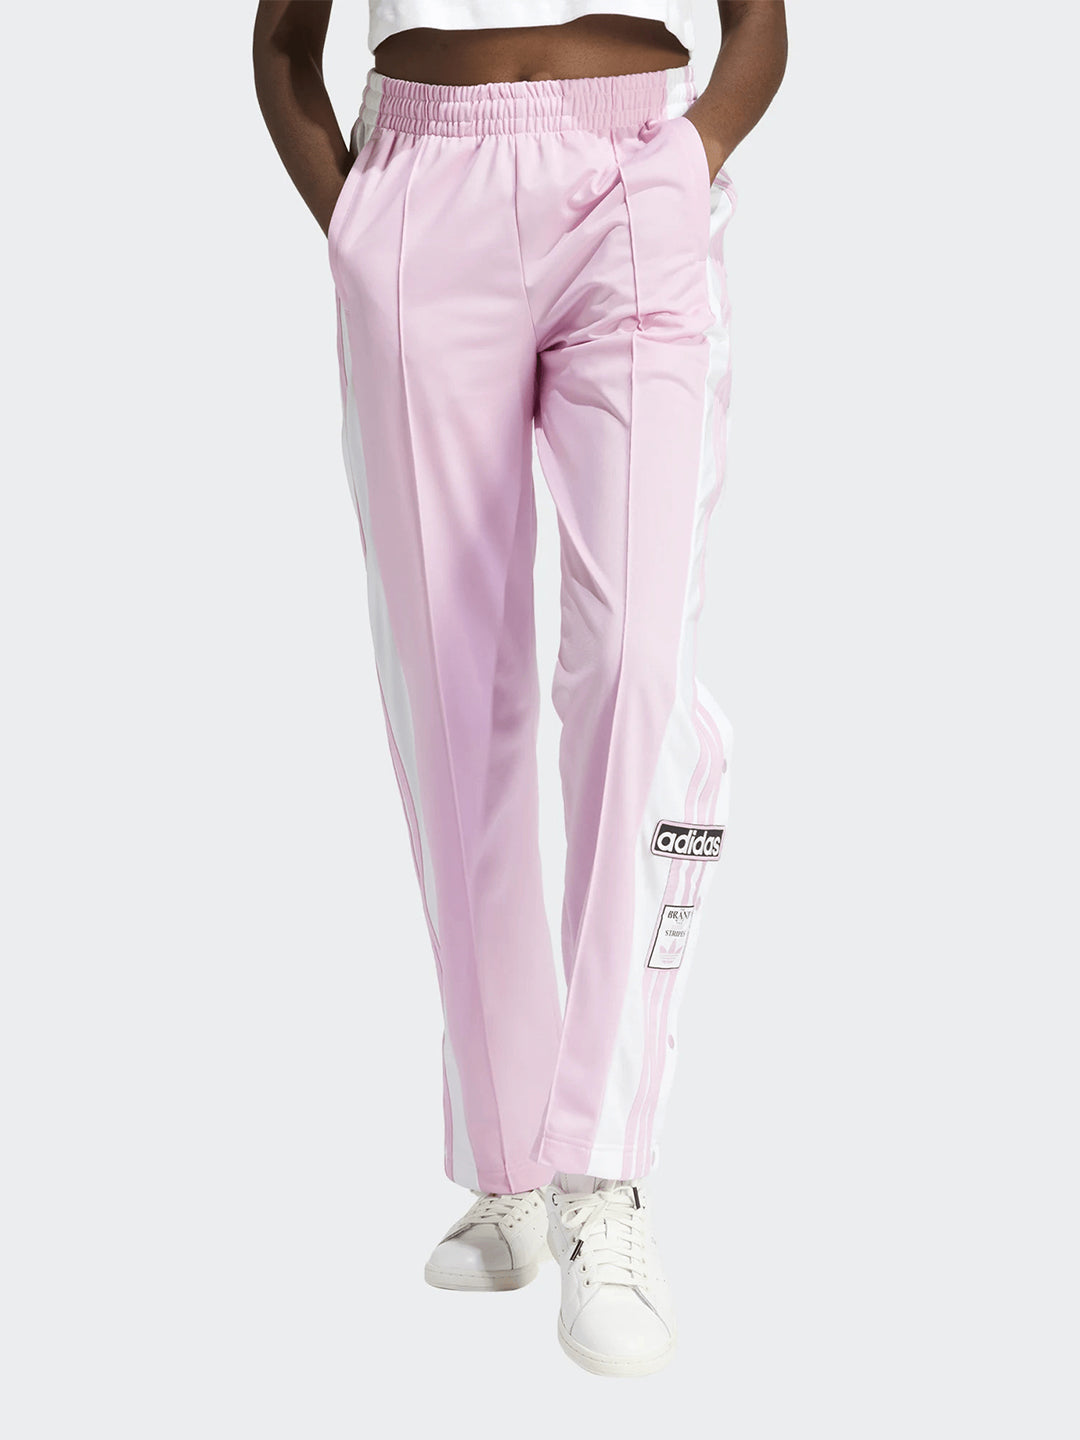 Adidas Adibreak pantaloni rosa con pannelli laterali